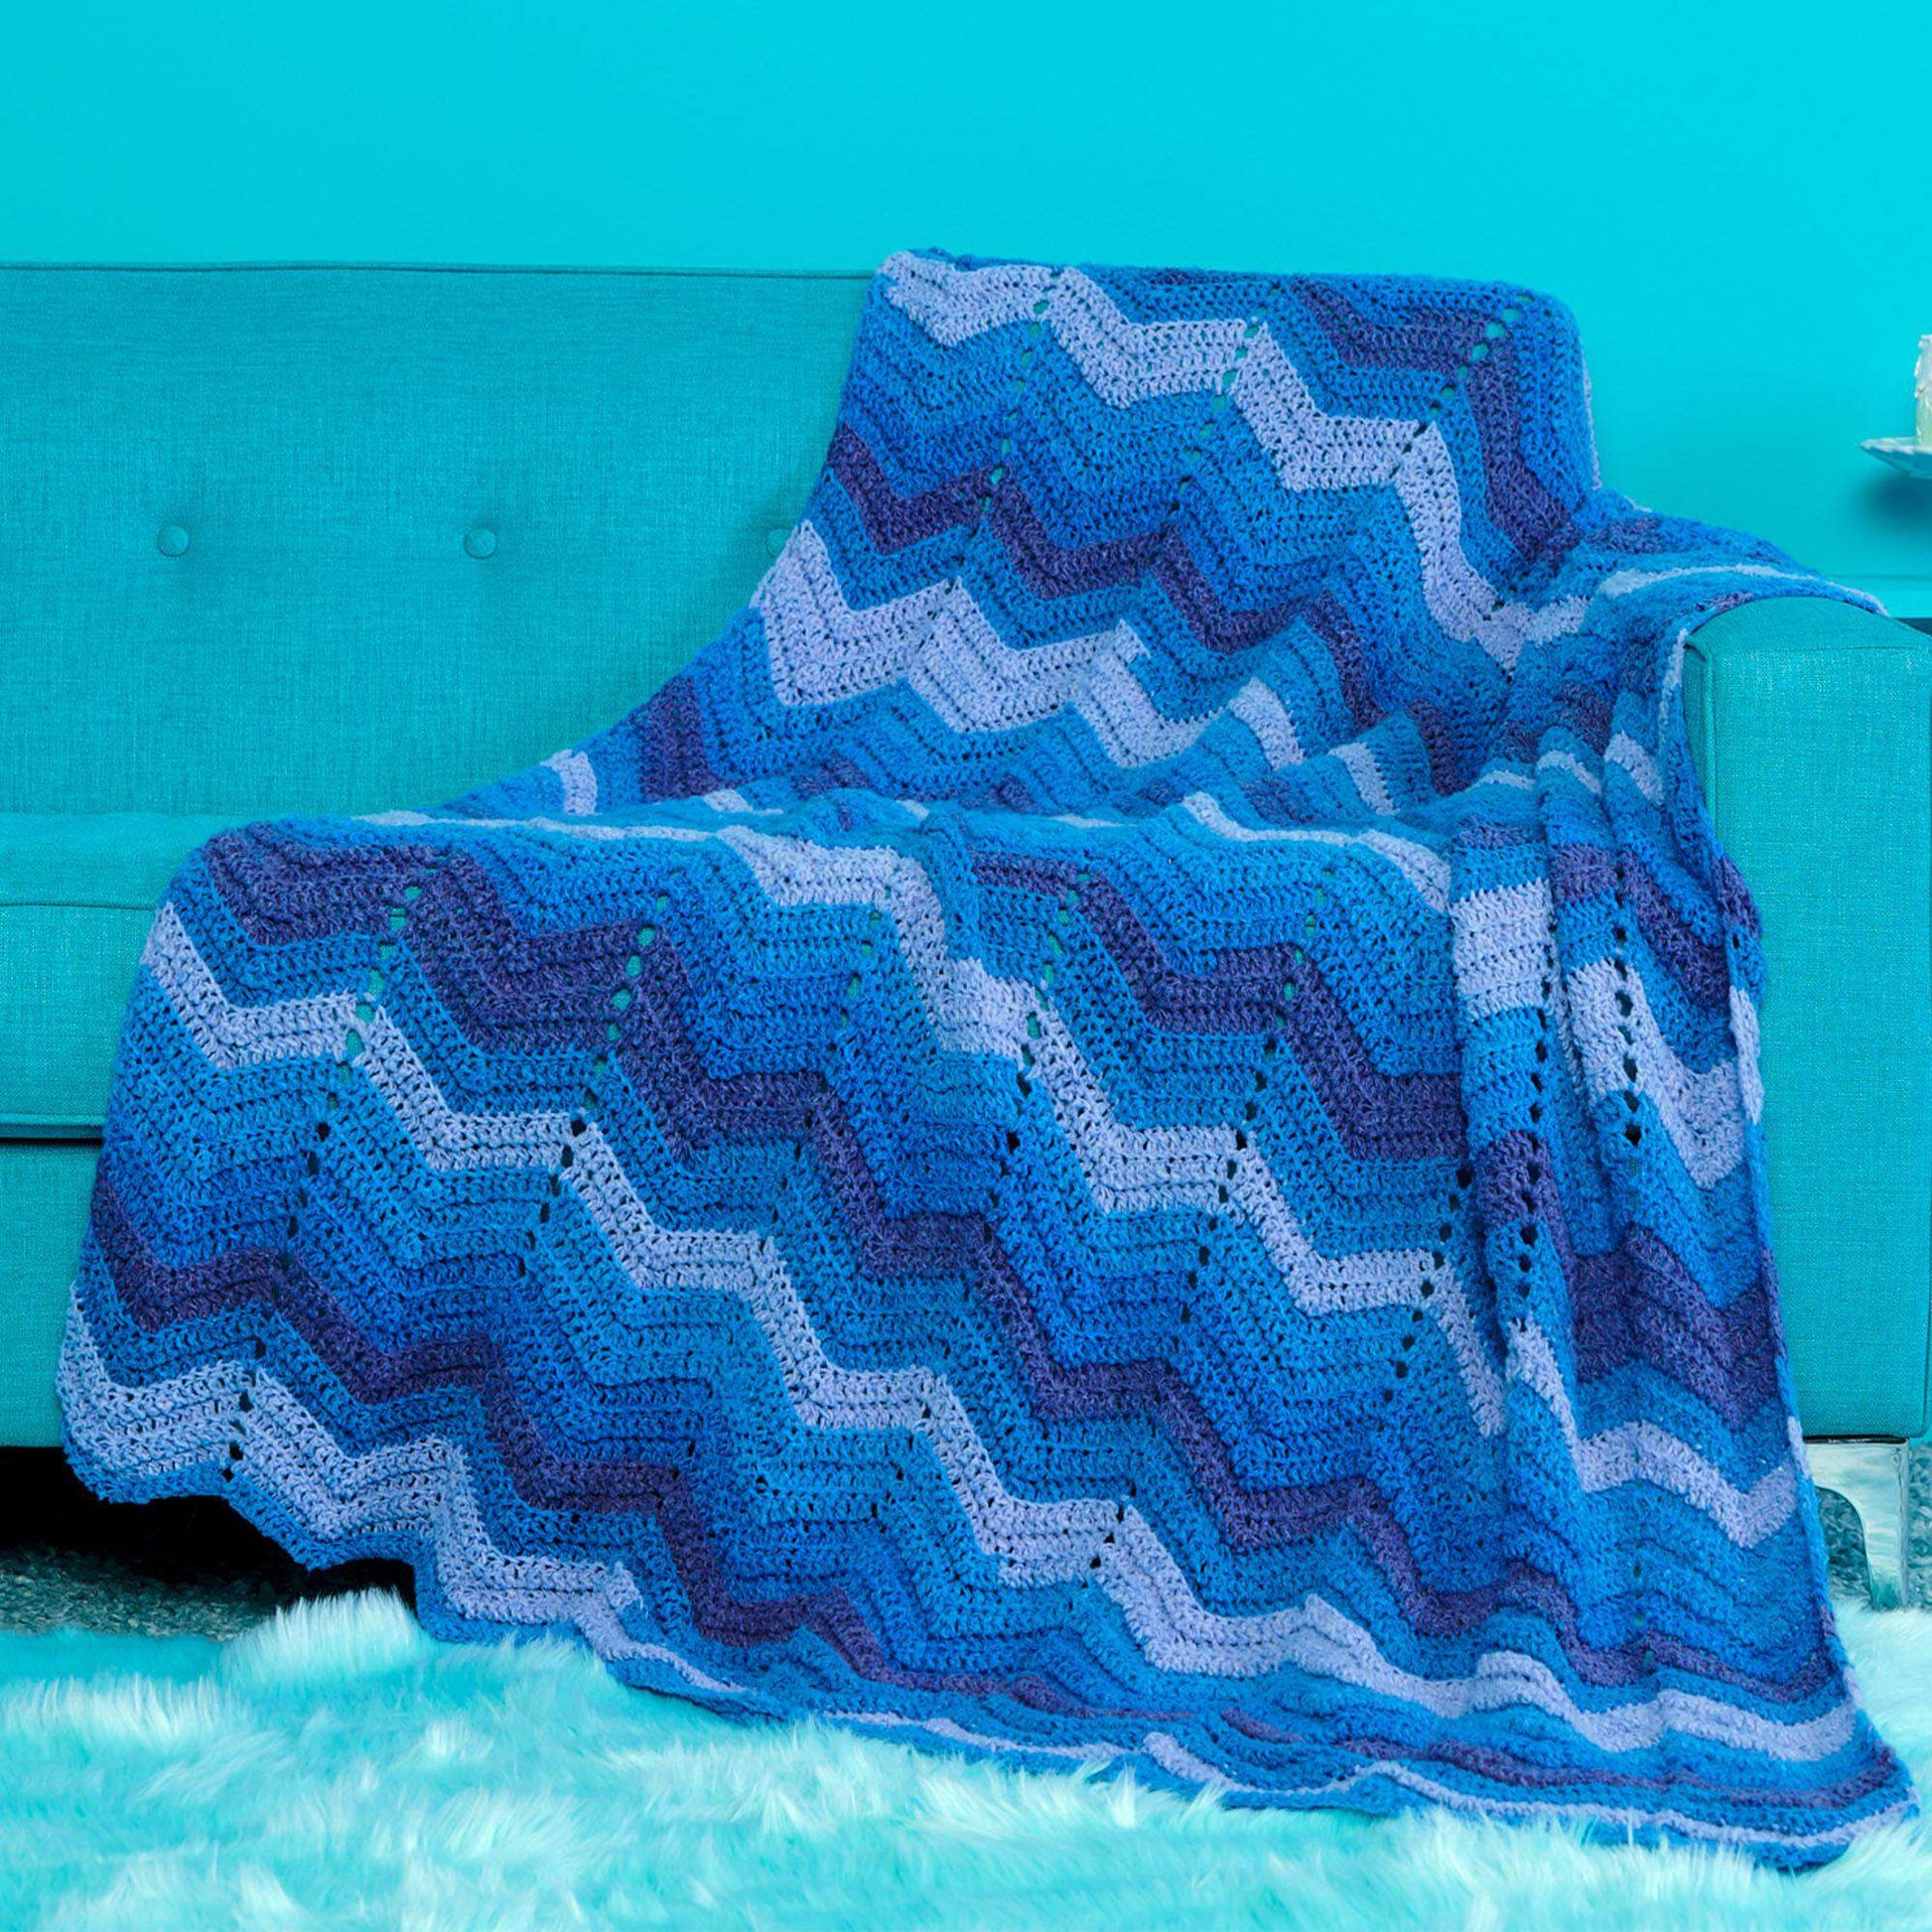 Free Caron Zigzag Crochet Blanket Pattern